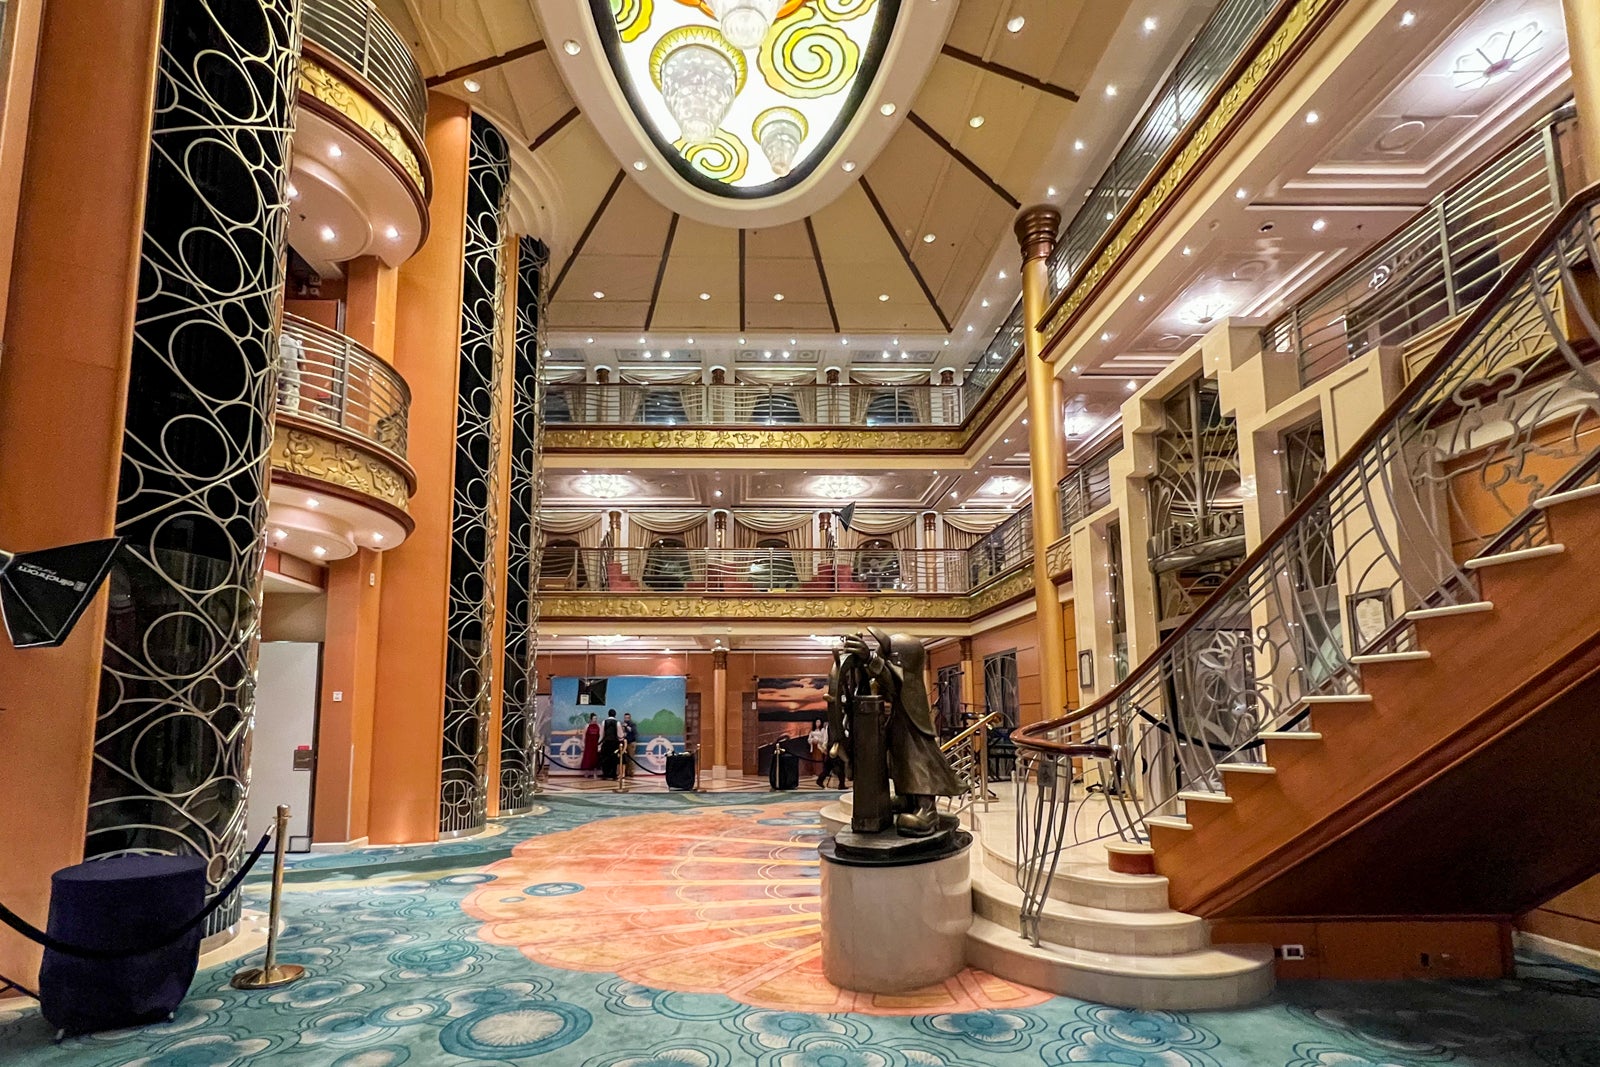 disney magic cruise ship details